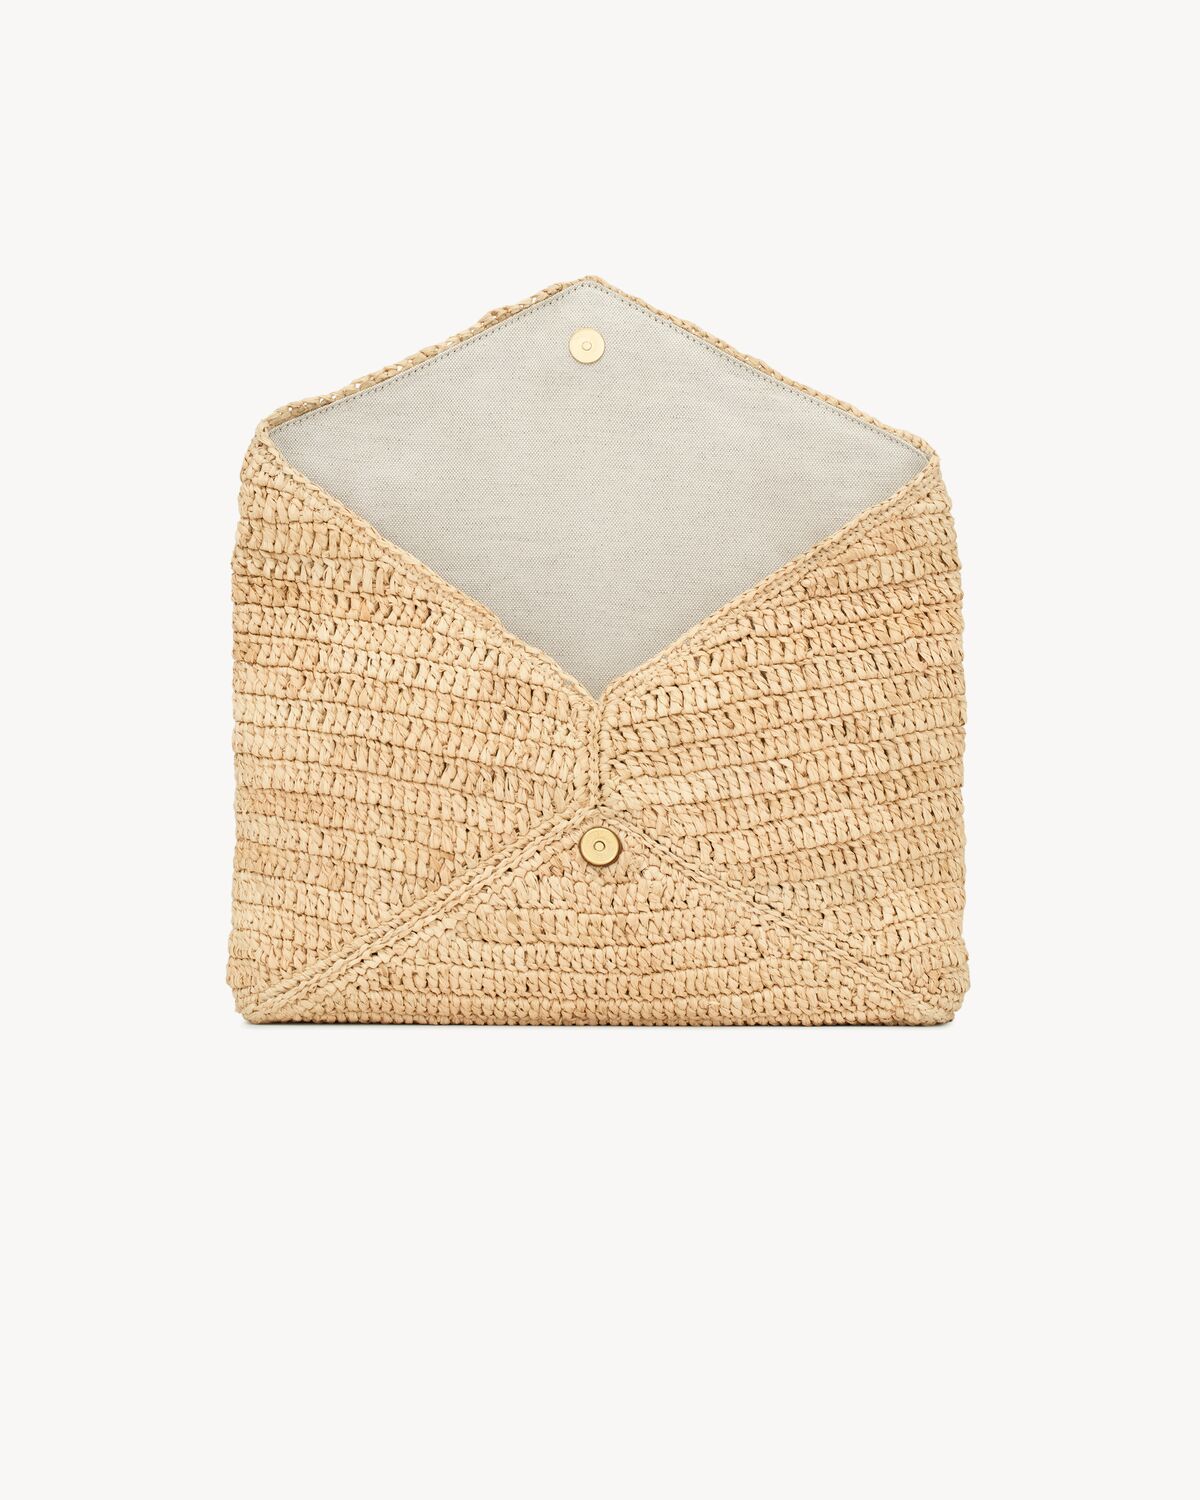 CASSANDRE large envelope pouch in raffia